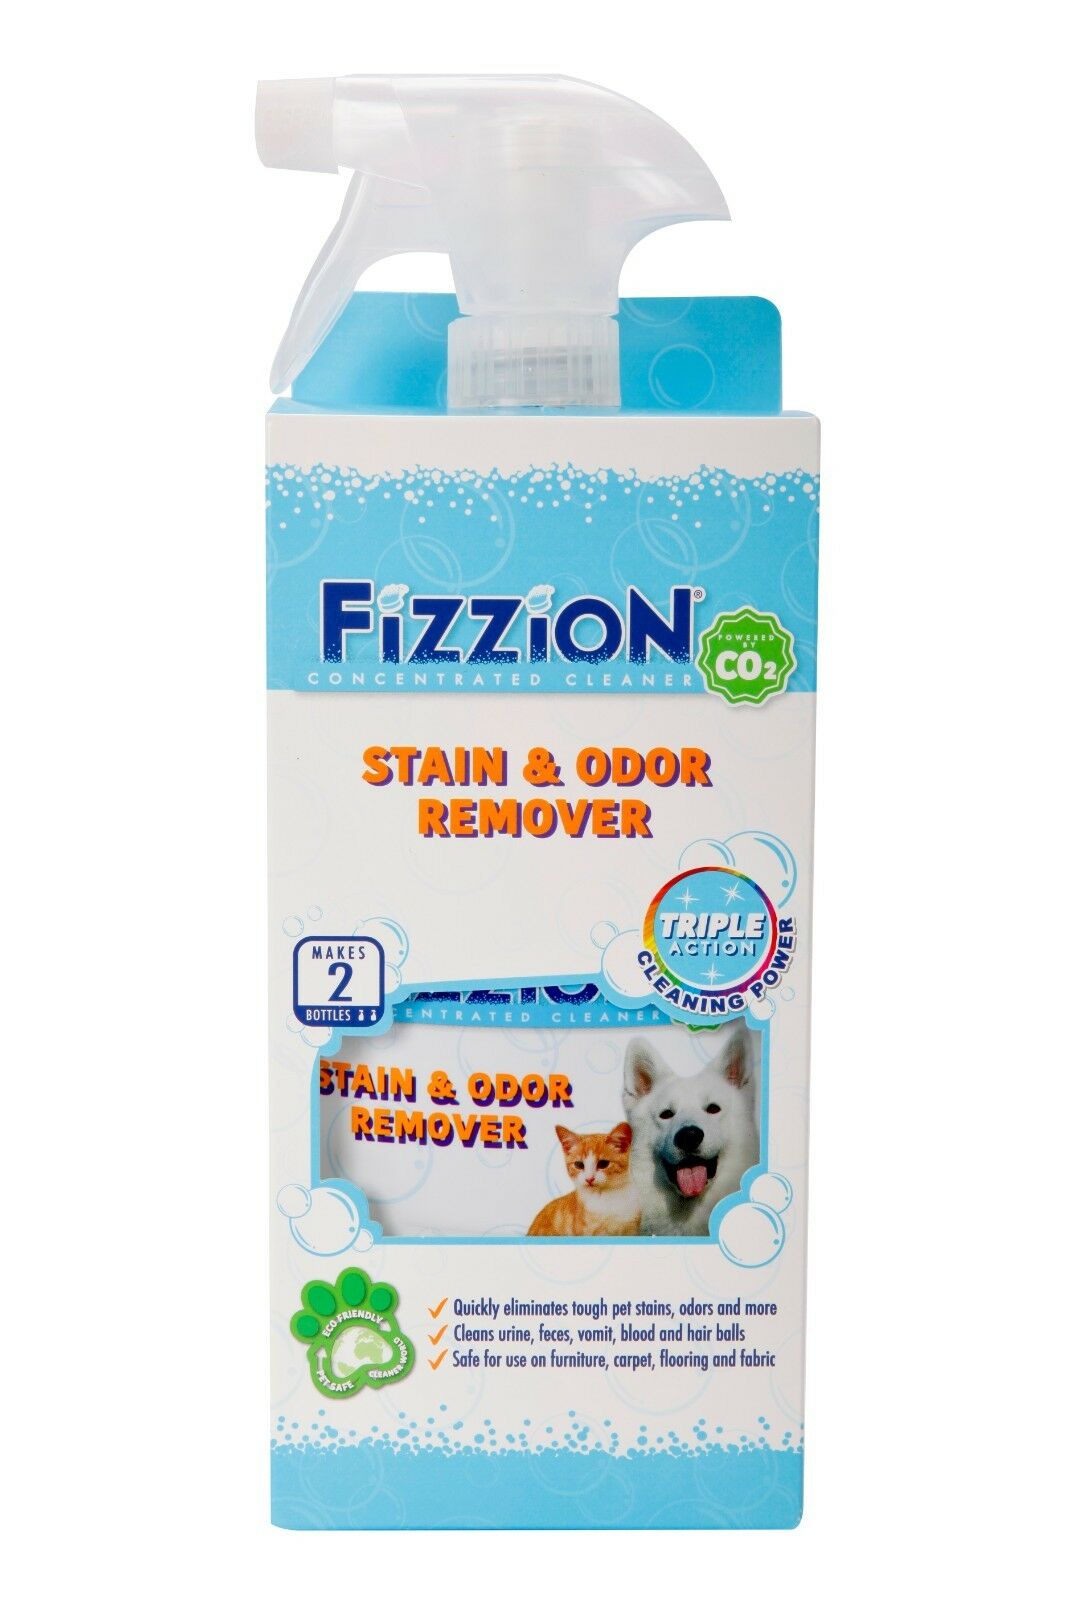 Fizzion Pet Stain & Odor Remover Cleaner 2 Tab & Spray Bottle Makes 2 Bottles